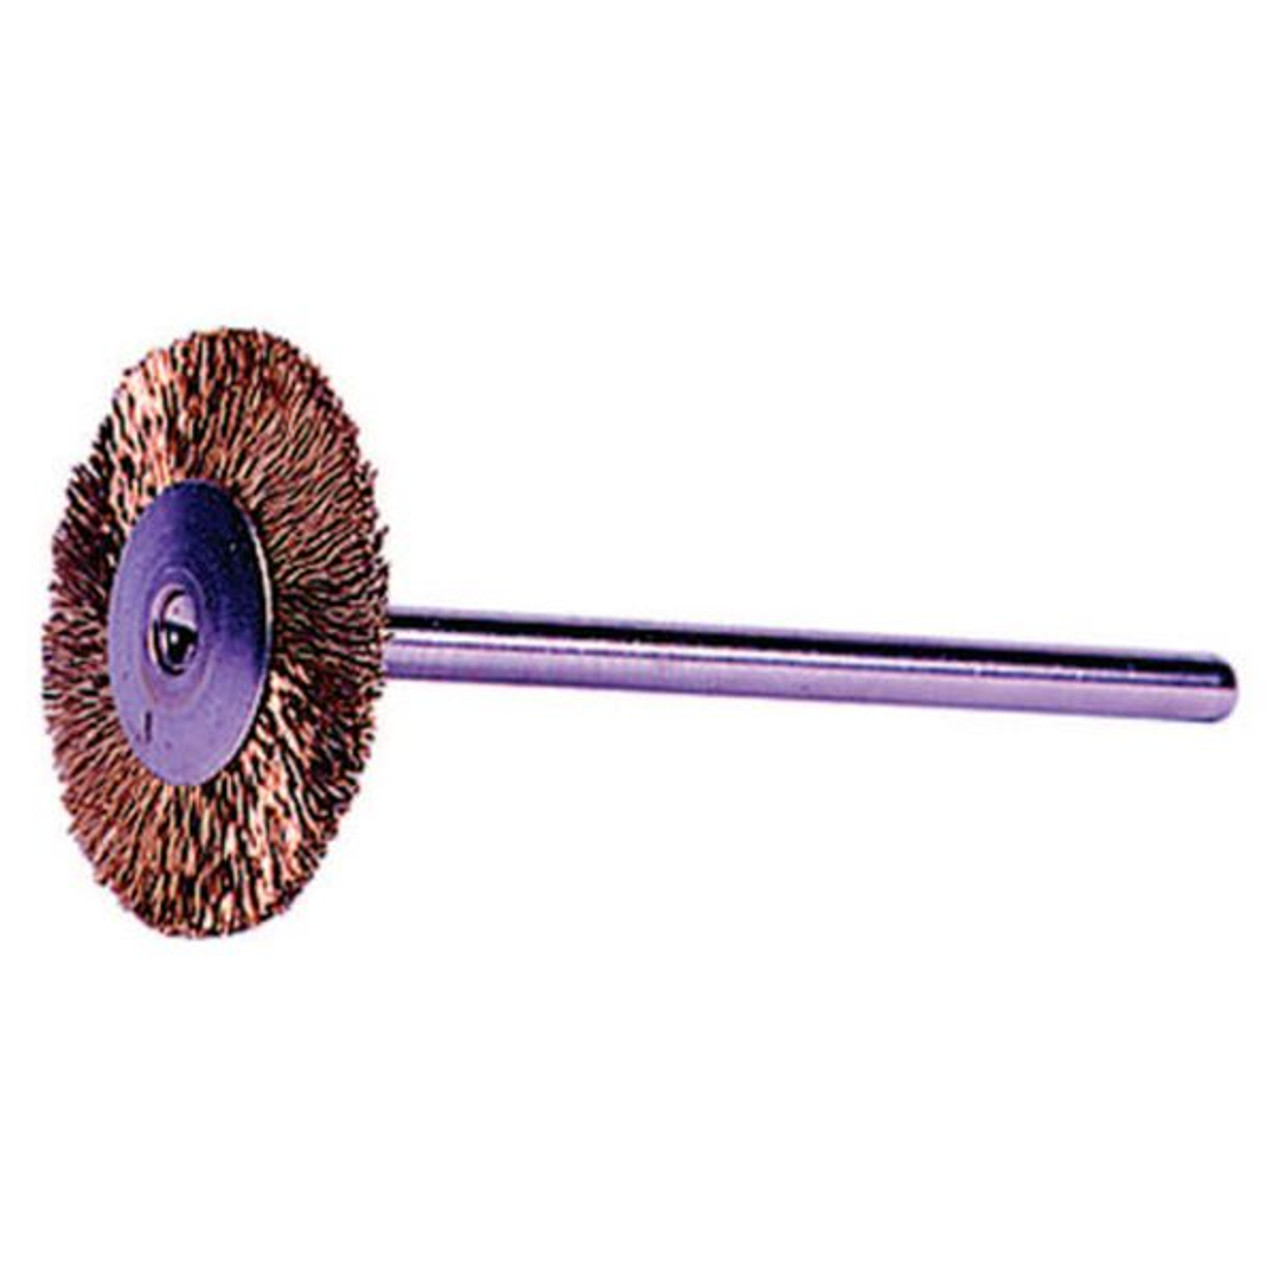 WEILER 26144 Miniature Stem-Mounted Wheel Brush 3/4 0.005 Brass Wire  37000RPM